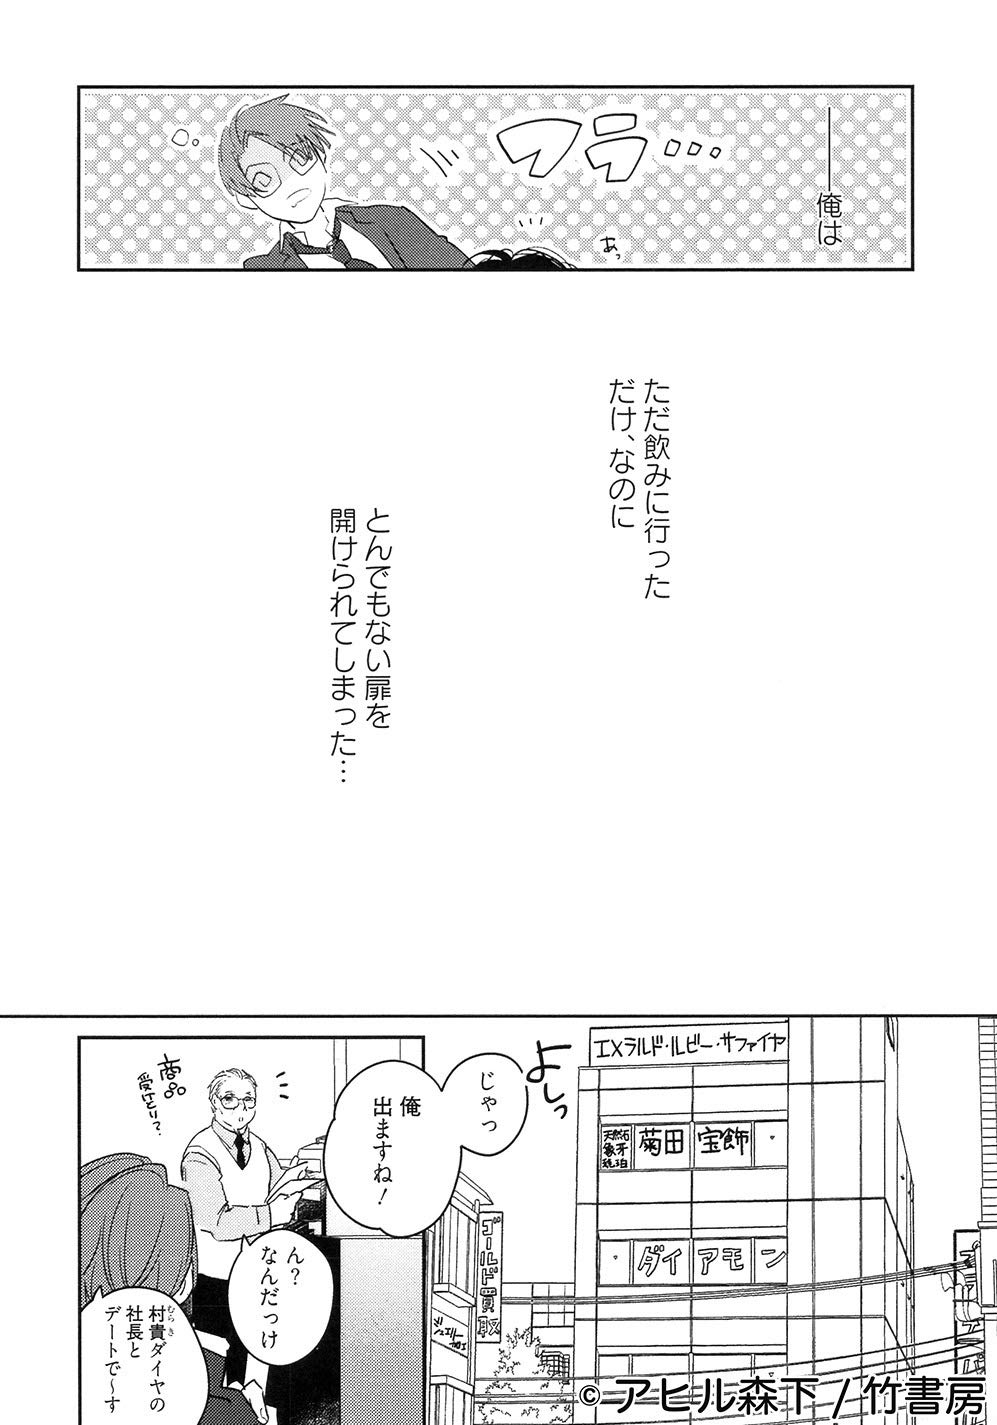 Boys Love (Yaoi) Comics - Shuumatsu no Akuma (週末の悪魔 (バンブー・コミックス REIJIN Selection)) / Ahiru Morishita